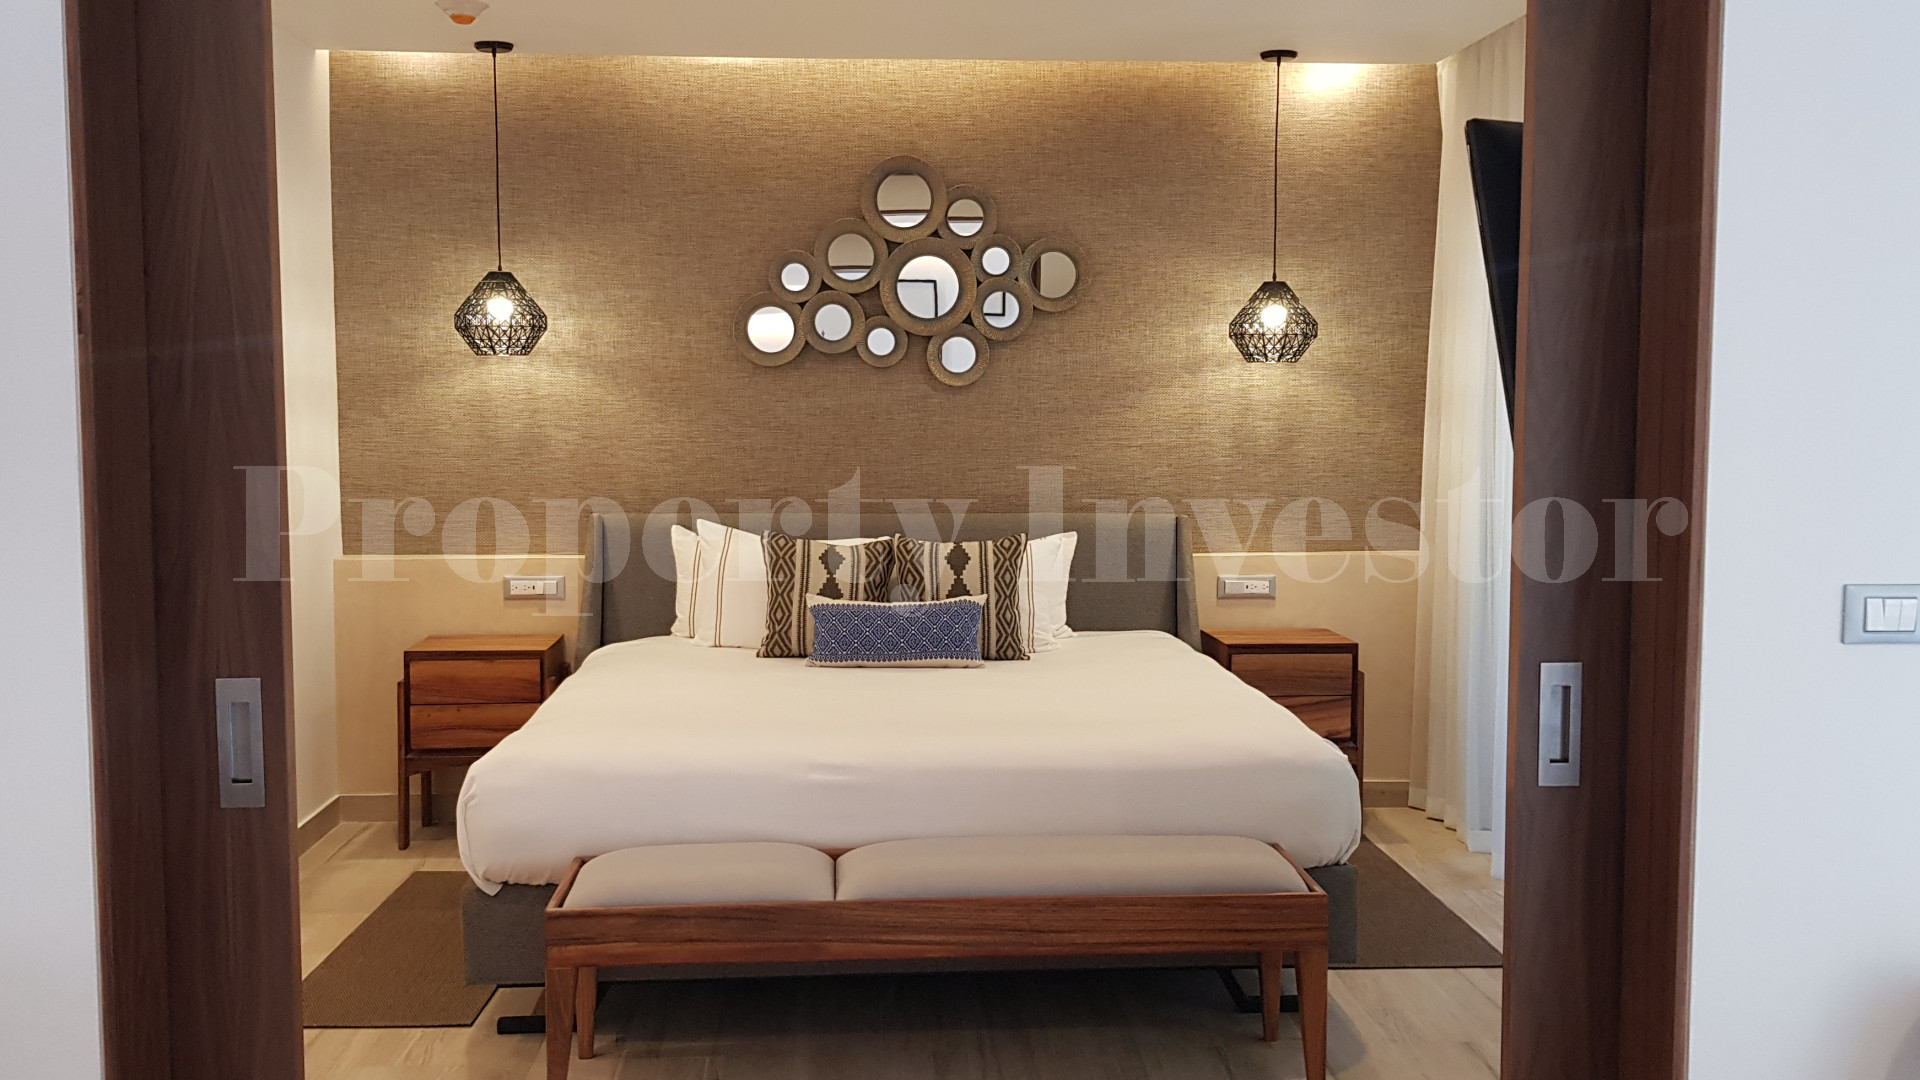 Exclusive 2 Bedroom Boutique Resort Apartment in Playa del Carmen (Unit 2123)